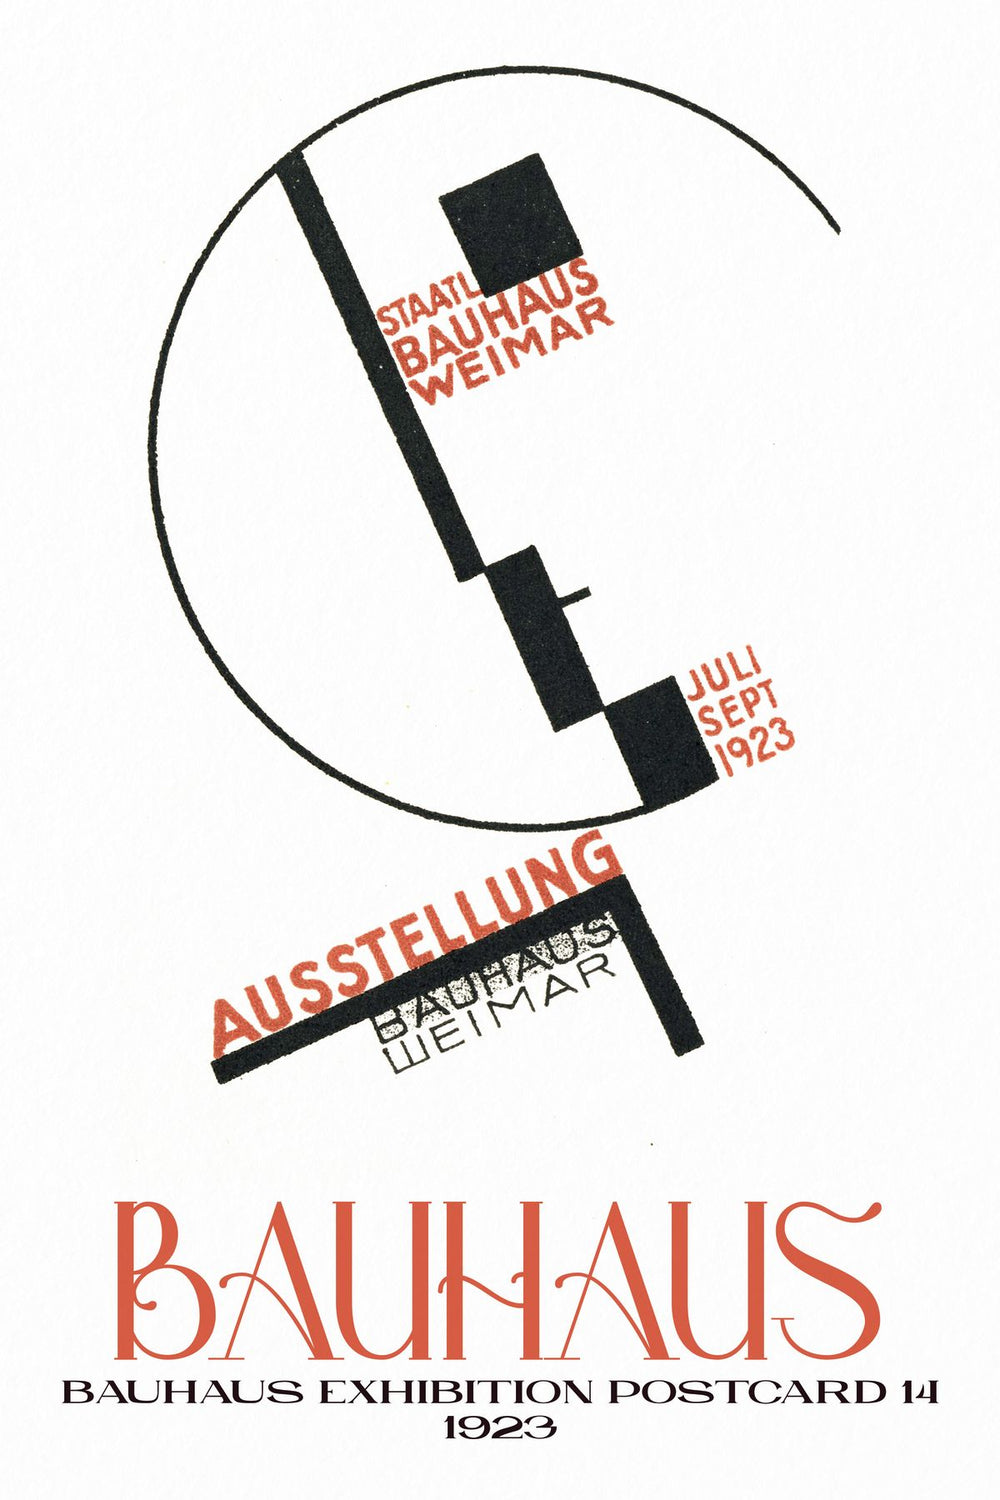 Exhibition Postcard 14 Bauhaus Poster